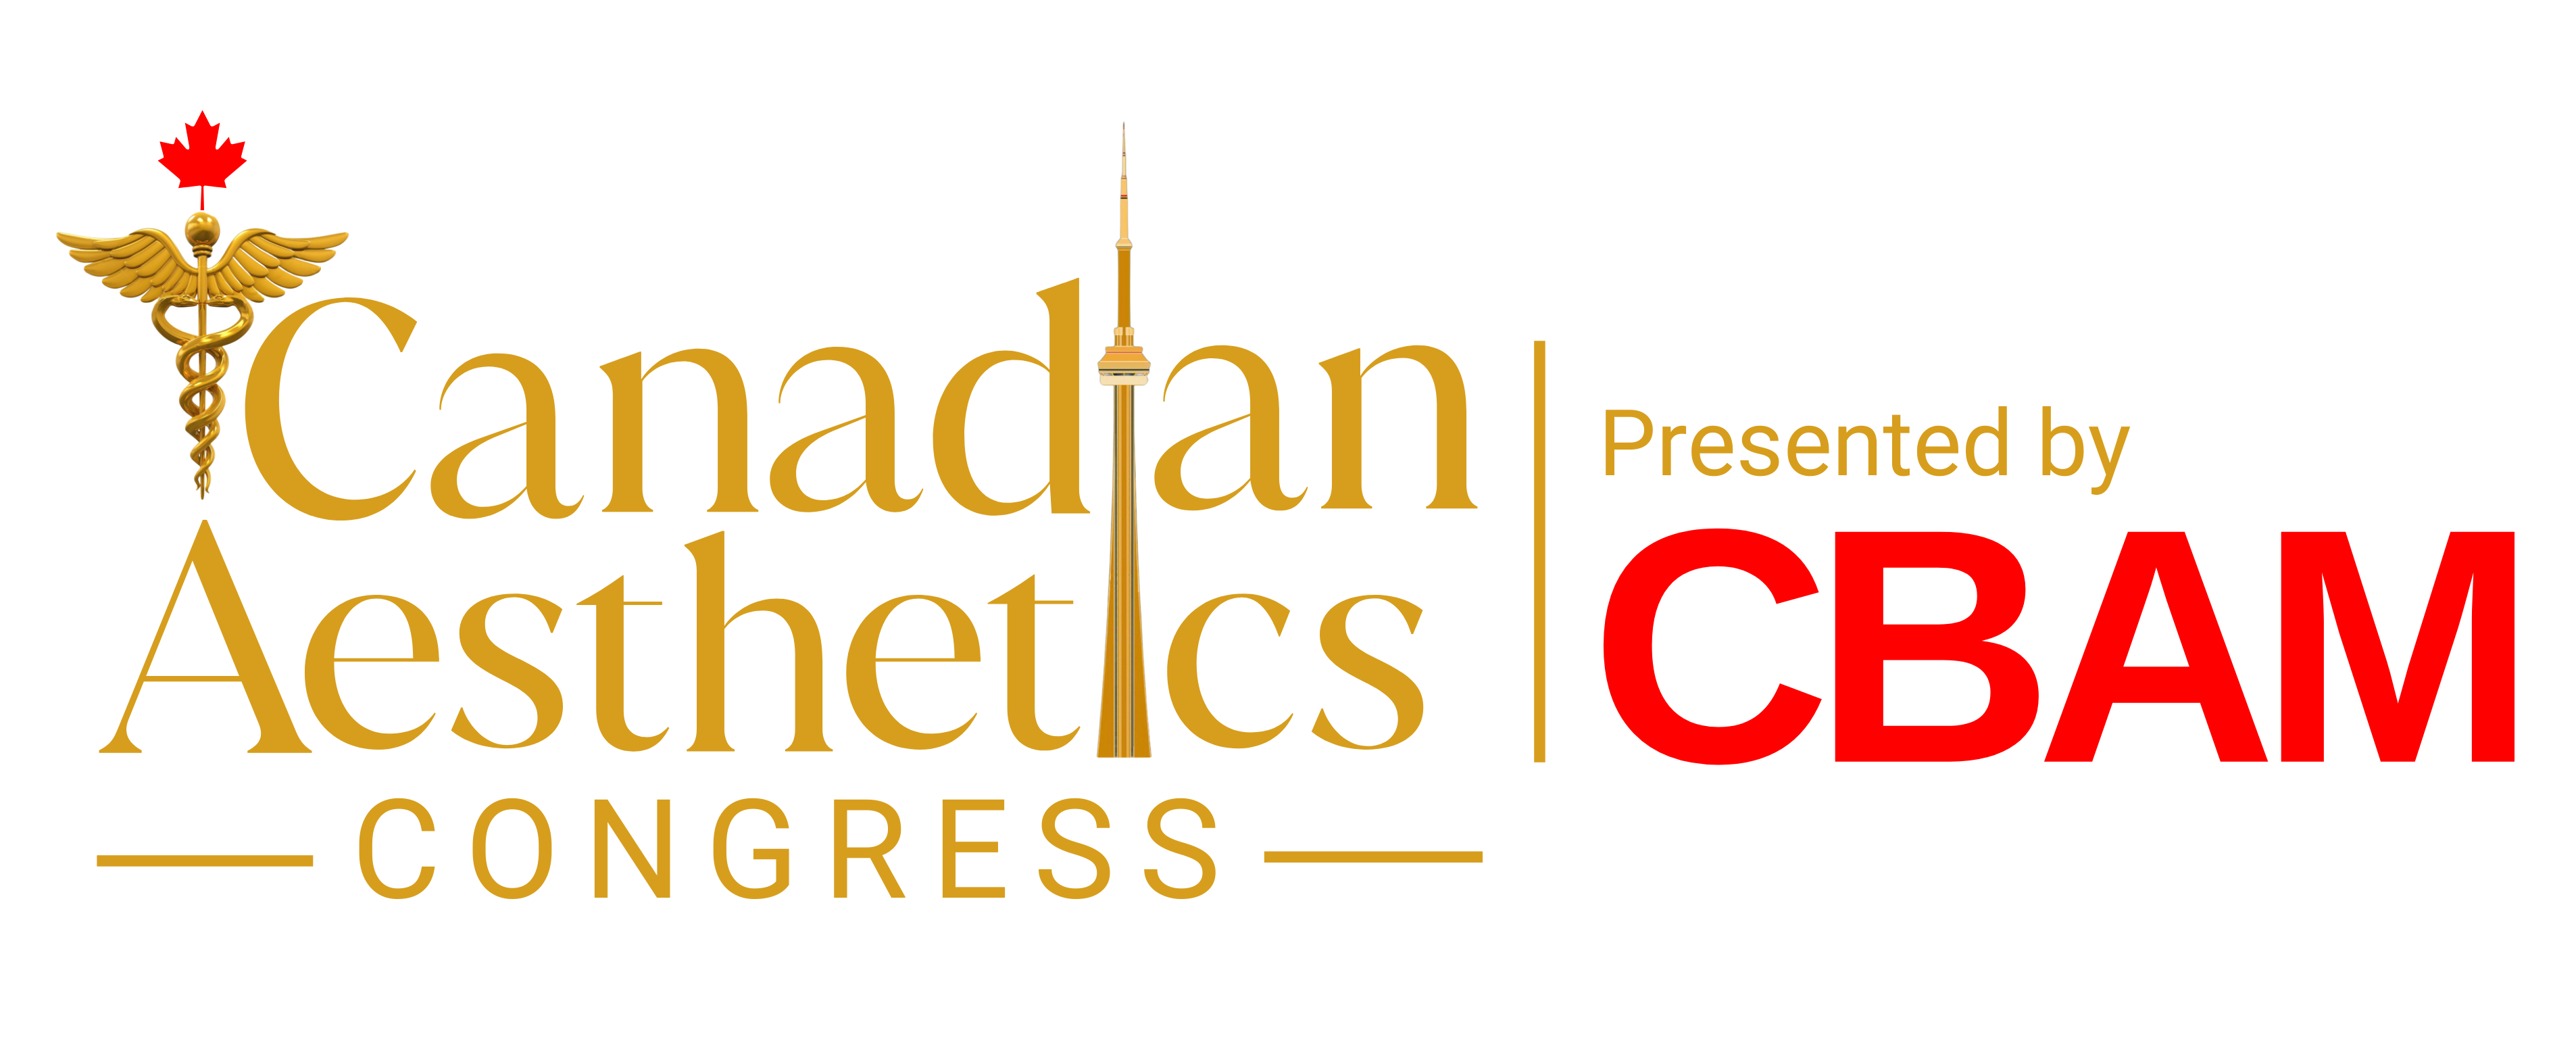 4.1 Canadian Aesthetics Congress